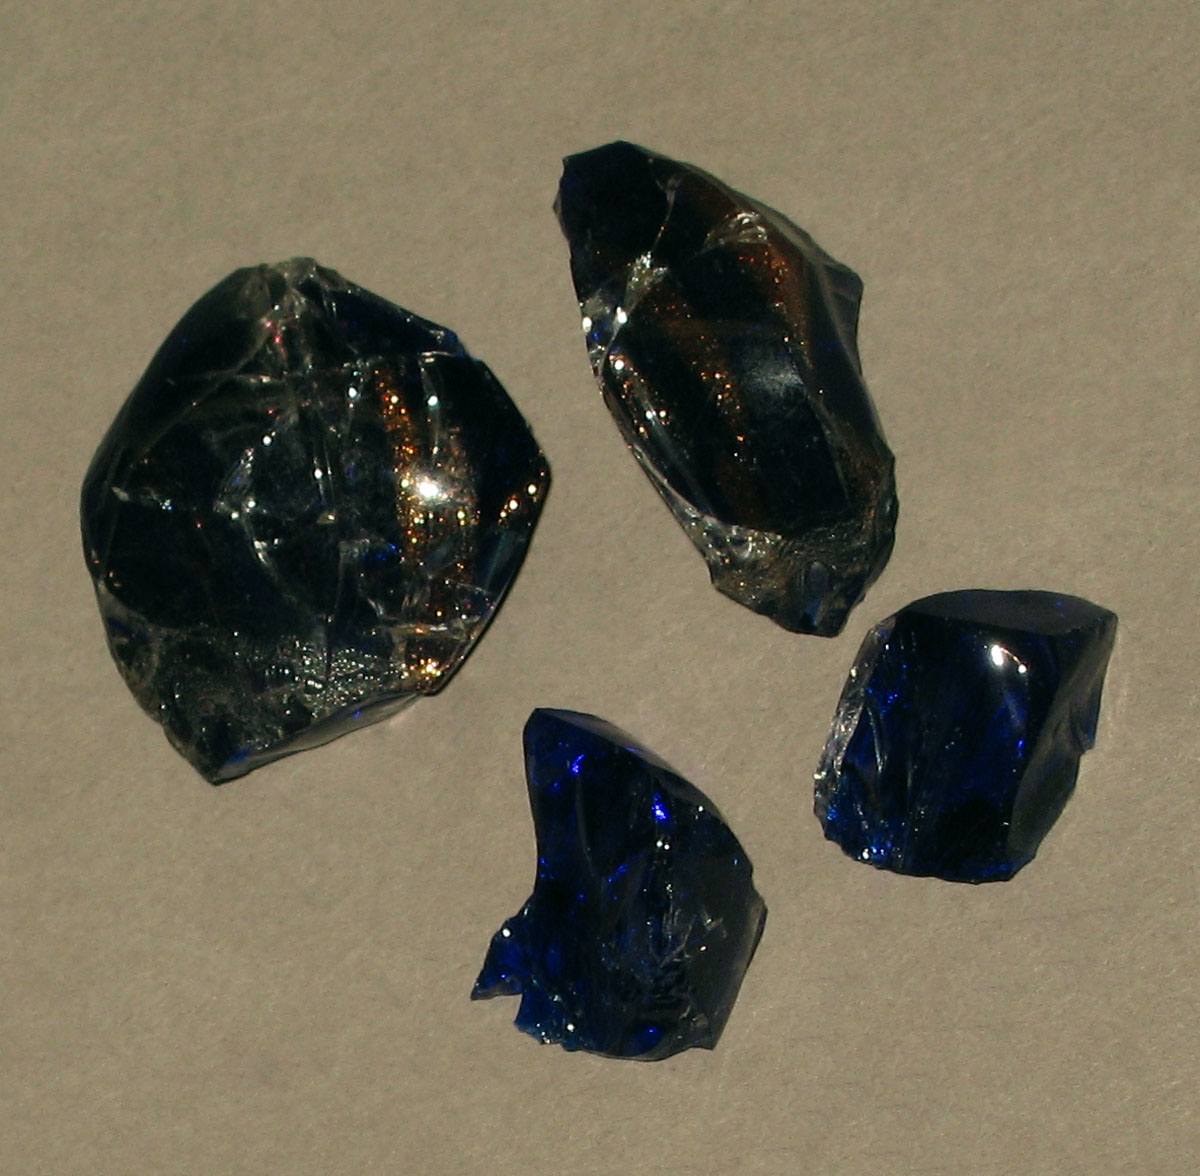 1958.0002.006.040 Glass fragment